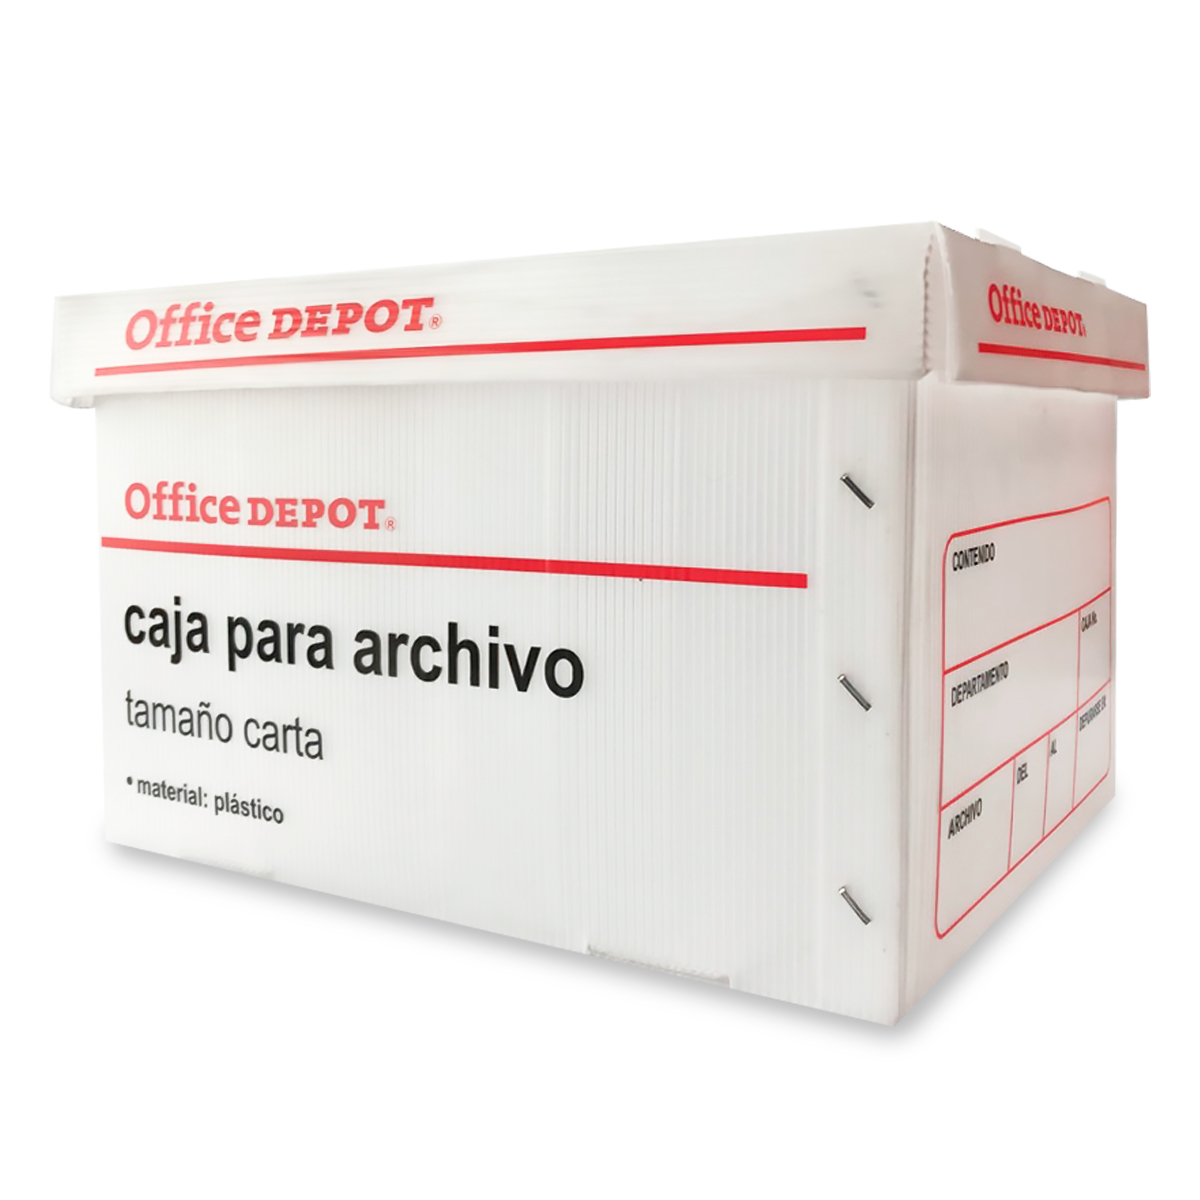 Caja Archivo Carta Office Depot Plástico | Office Depot Mexico